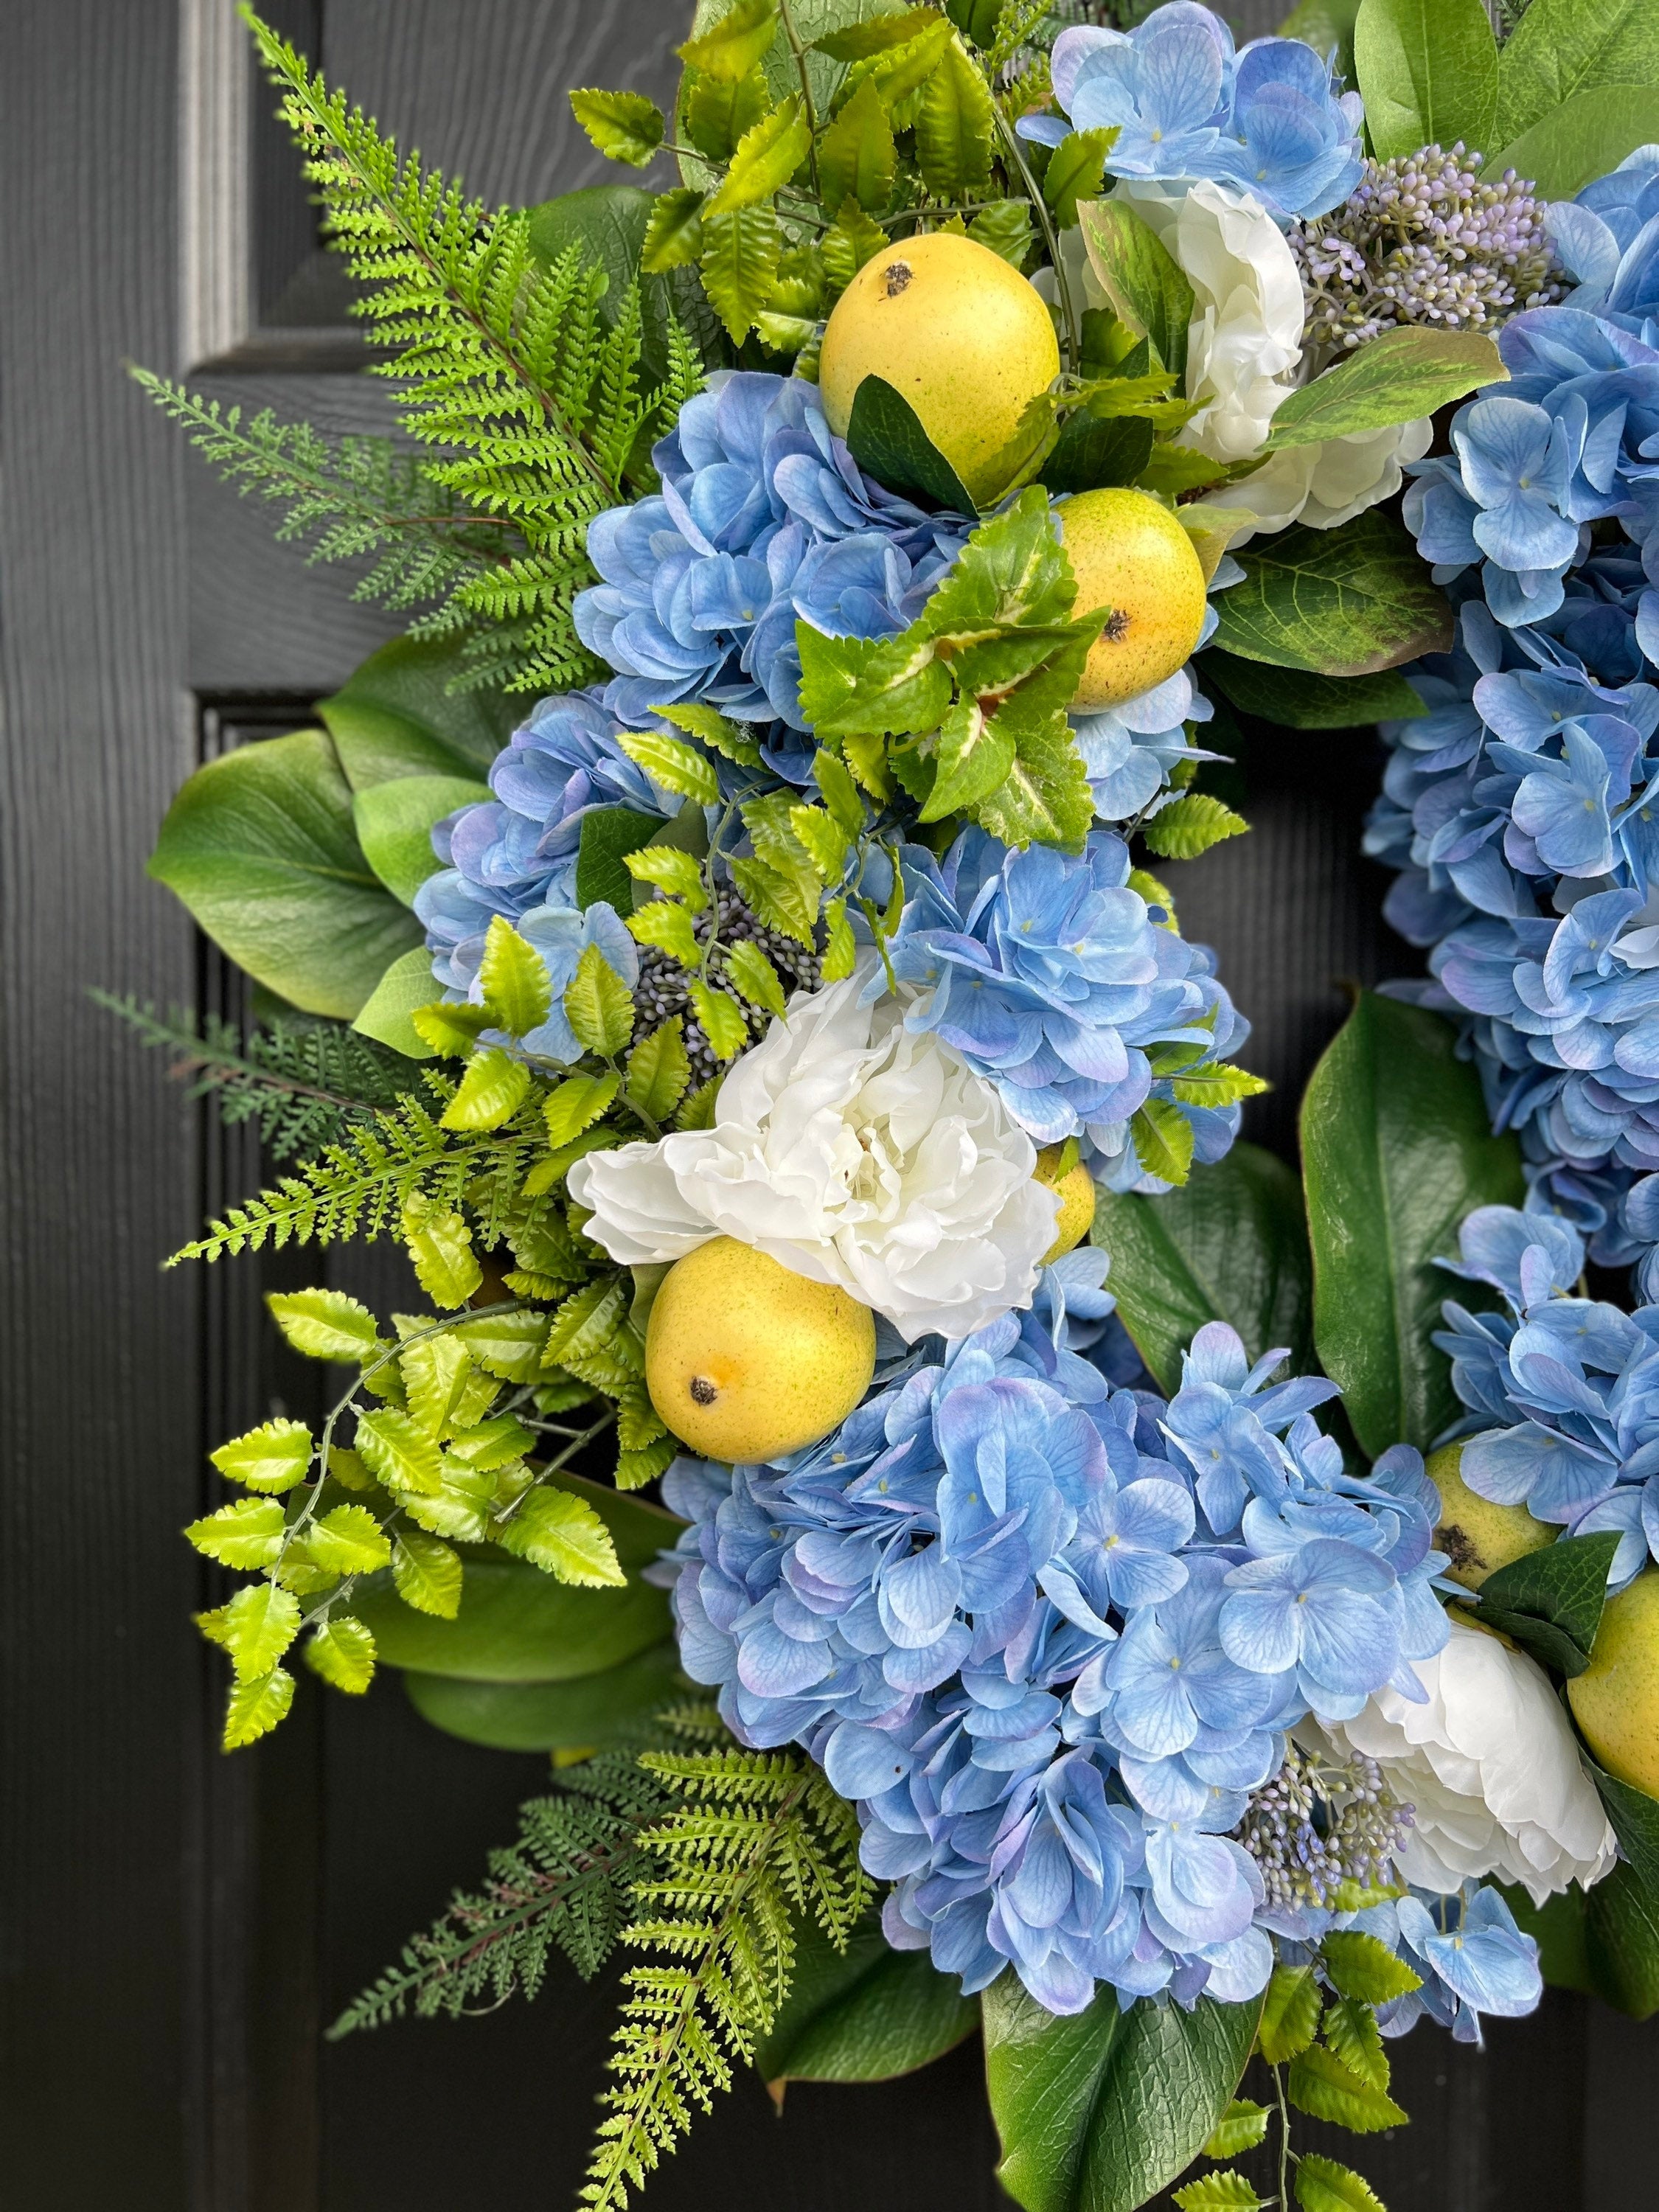 The “Fern” blue hydrangea, pear, and white peony wreath